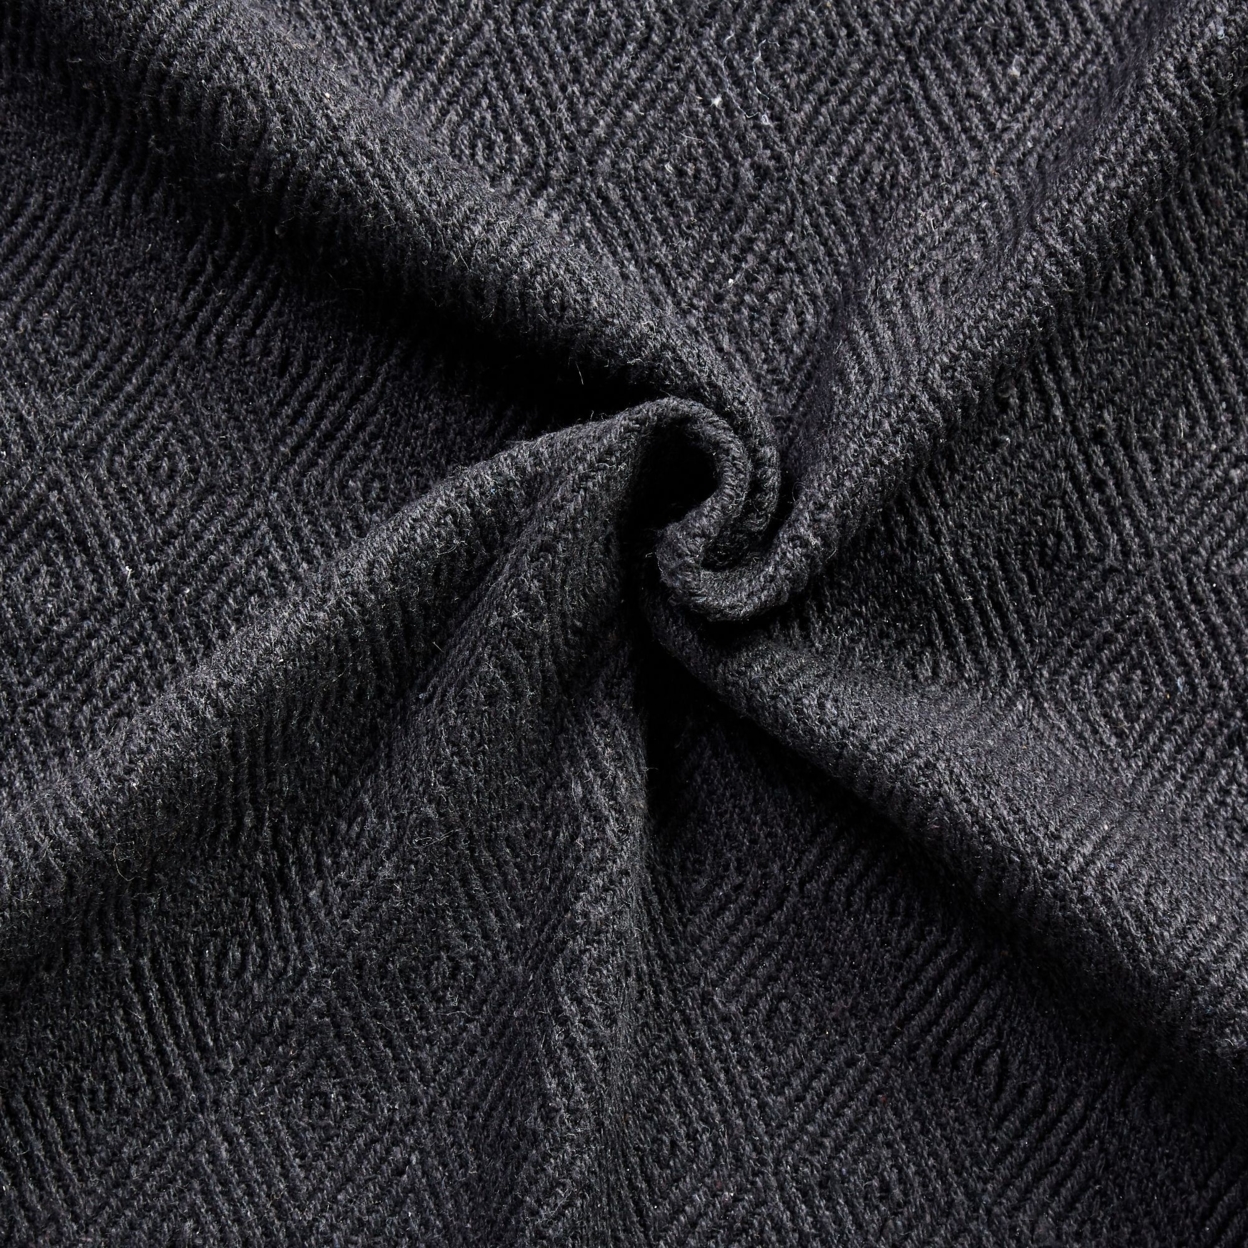 Lyon Fabric Throw With Textured Waffle Weave Design The Urban Port, Set Of 2, Black- Saltoro Sherpi